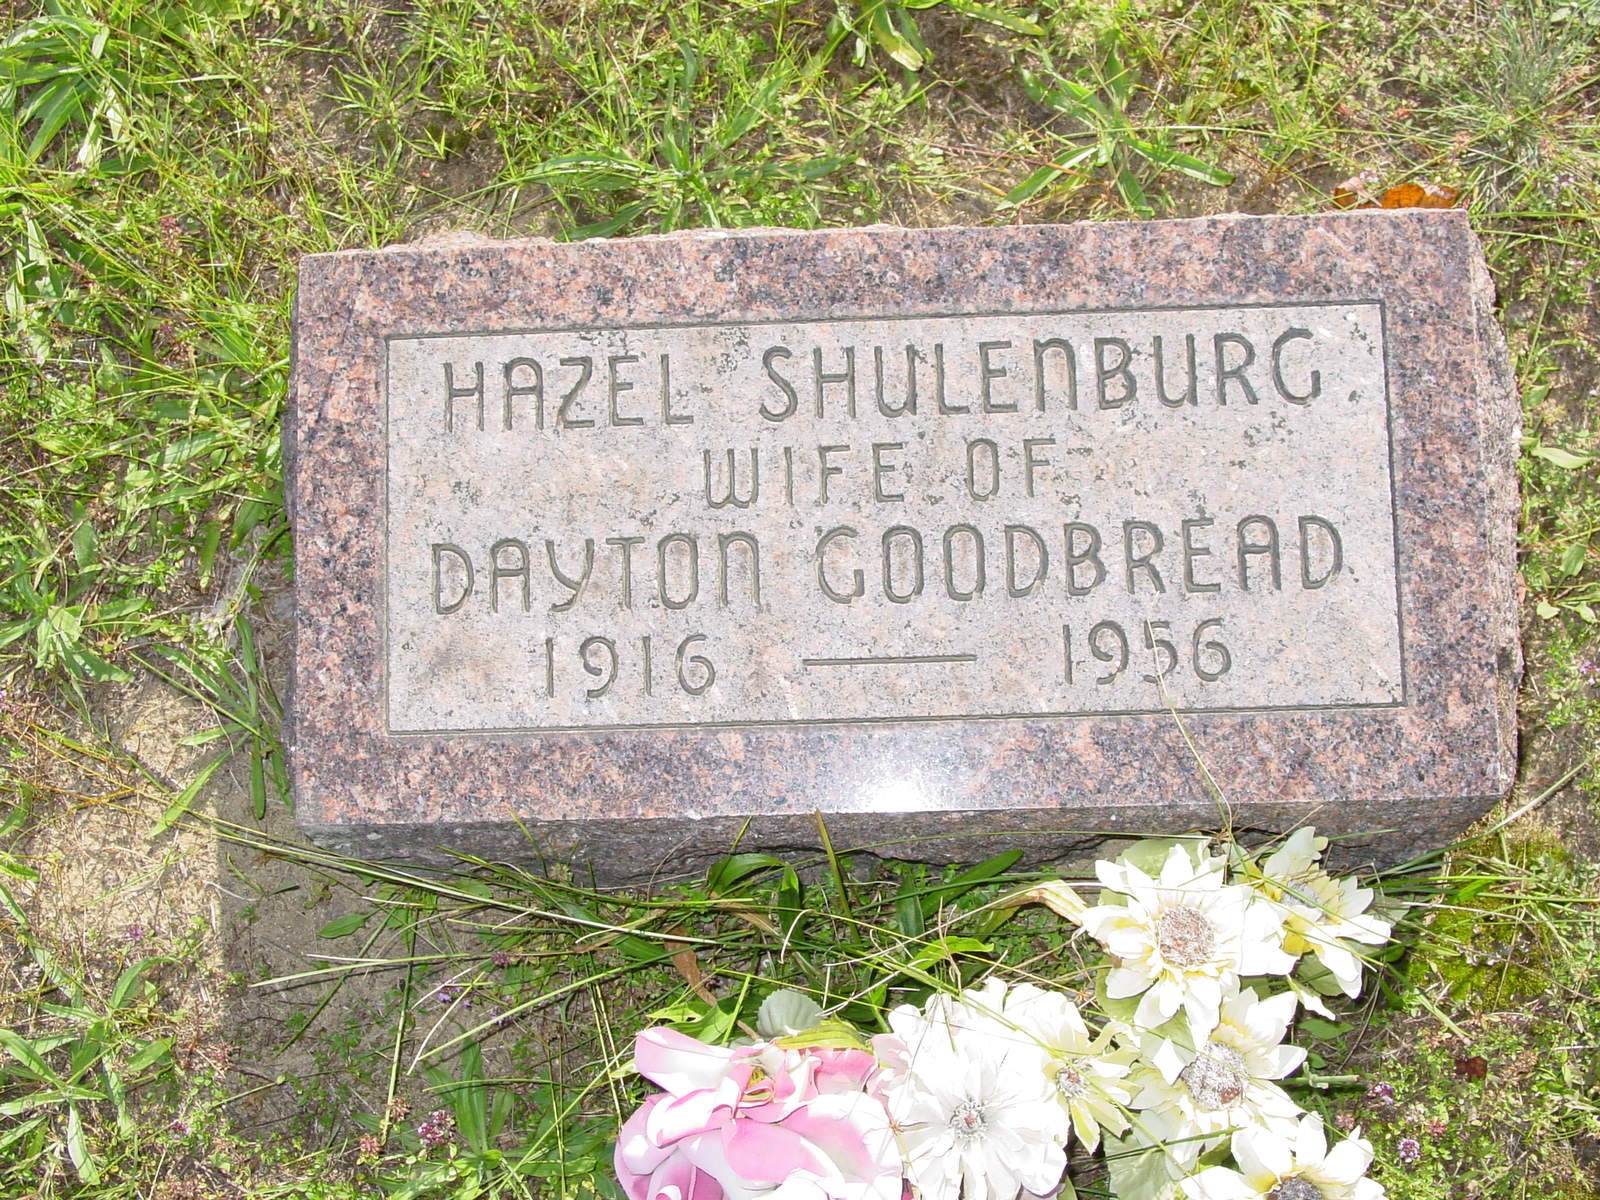 Hazel (Shulenburg) Goodbread gravesite 